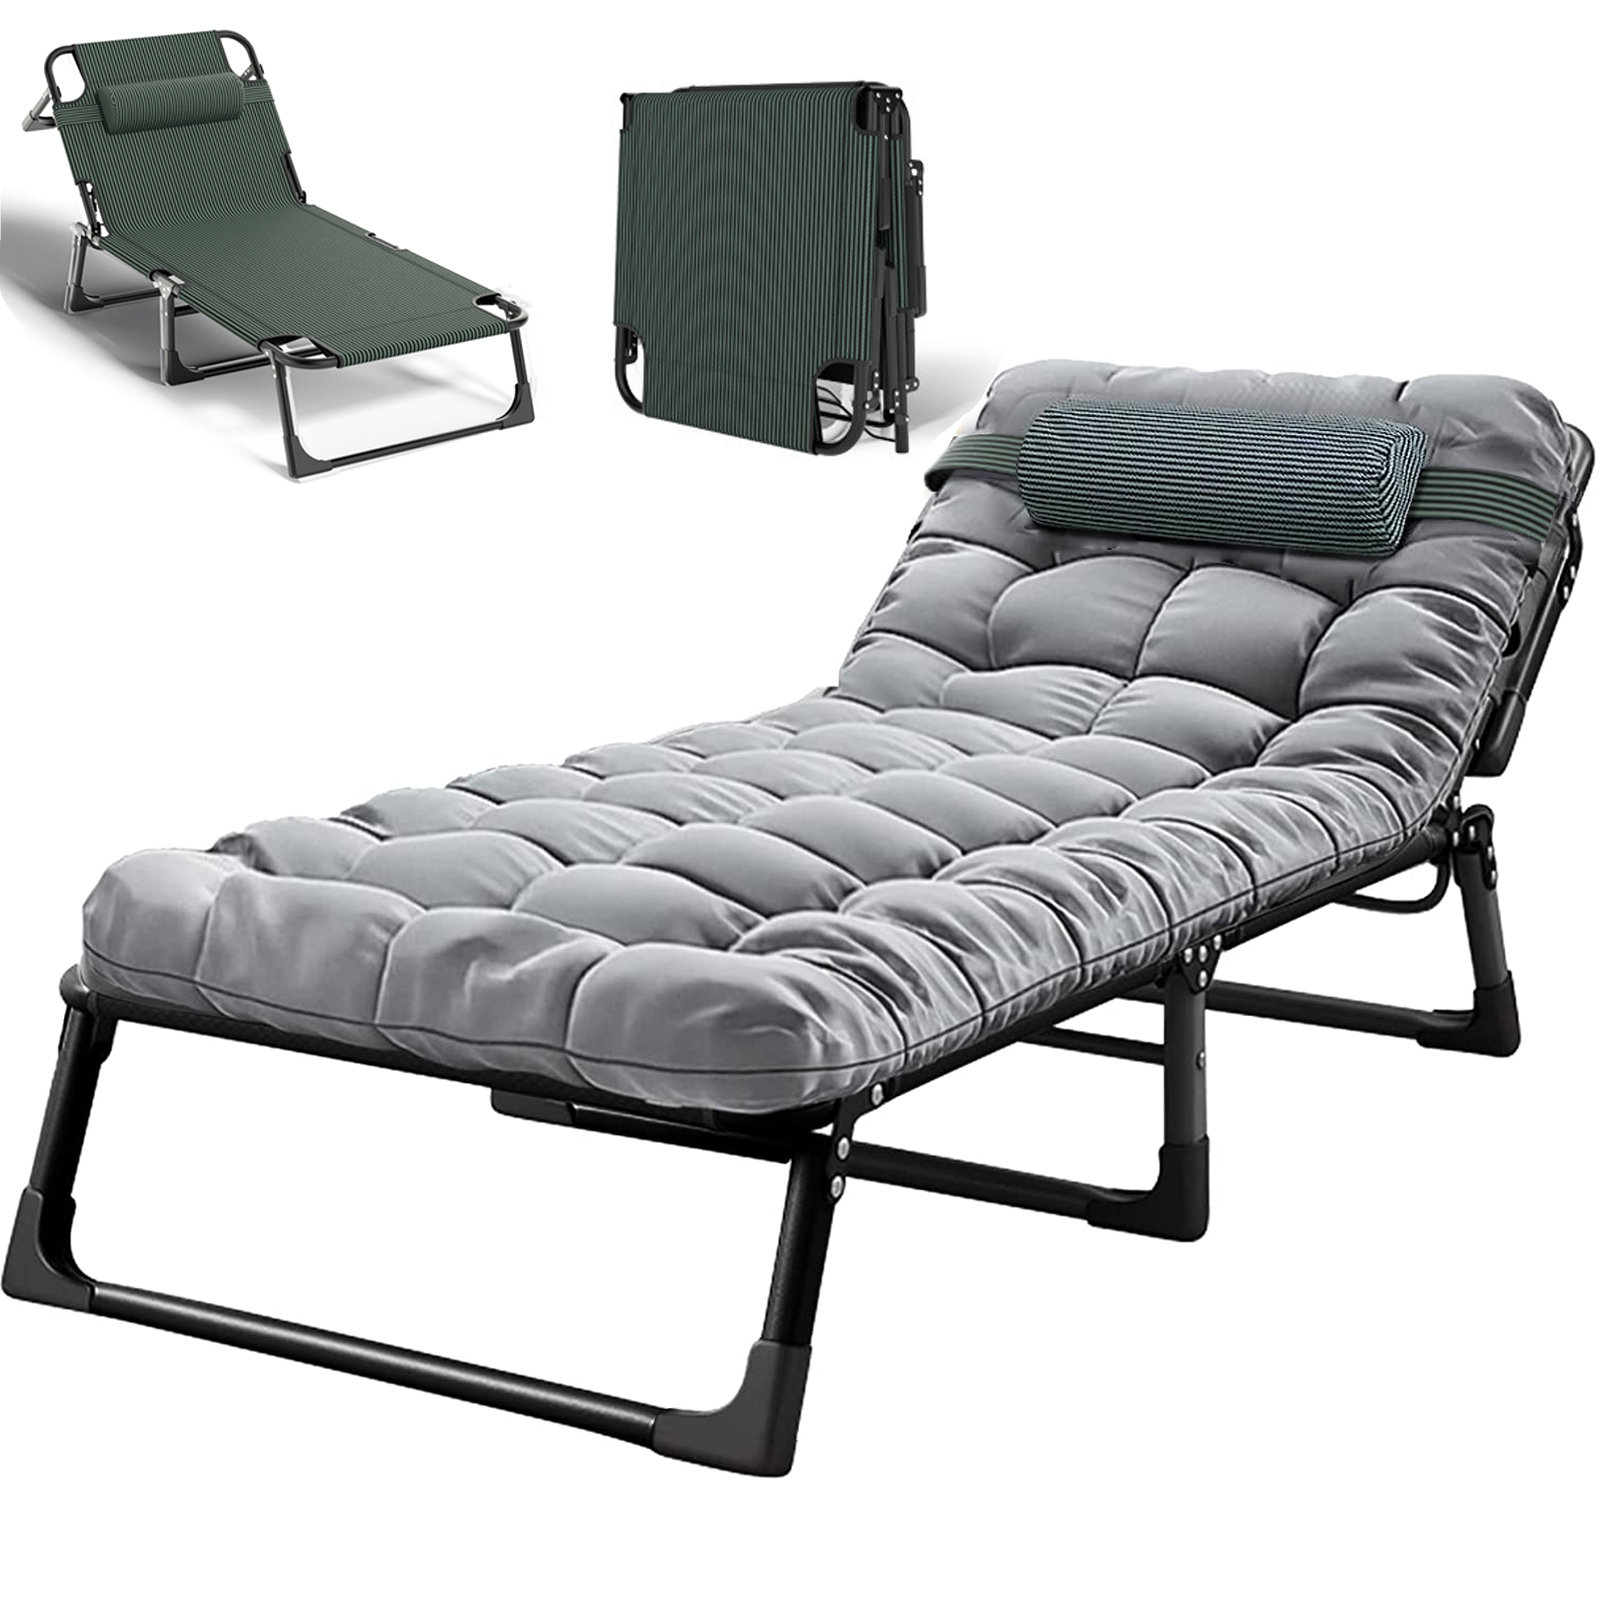 Wewdigi Adjustable 4-Position Folding Lounge Chair, Camping Cot